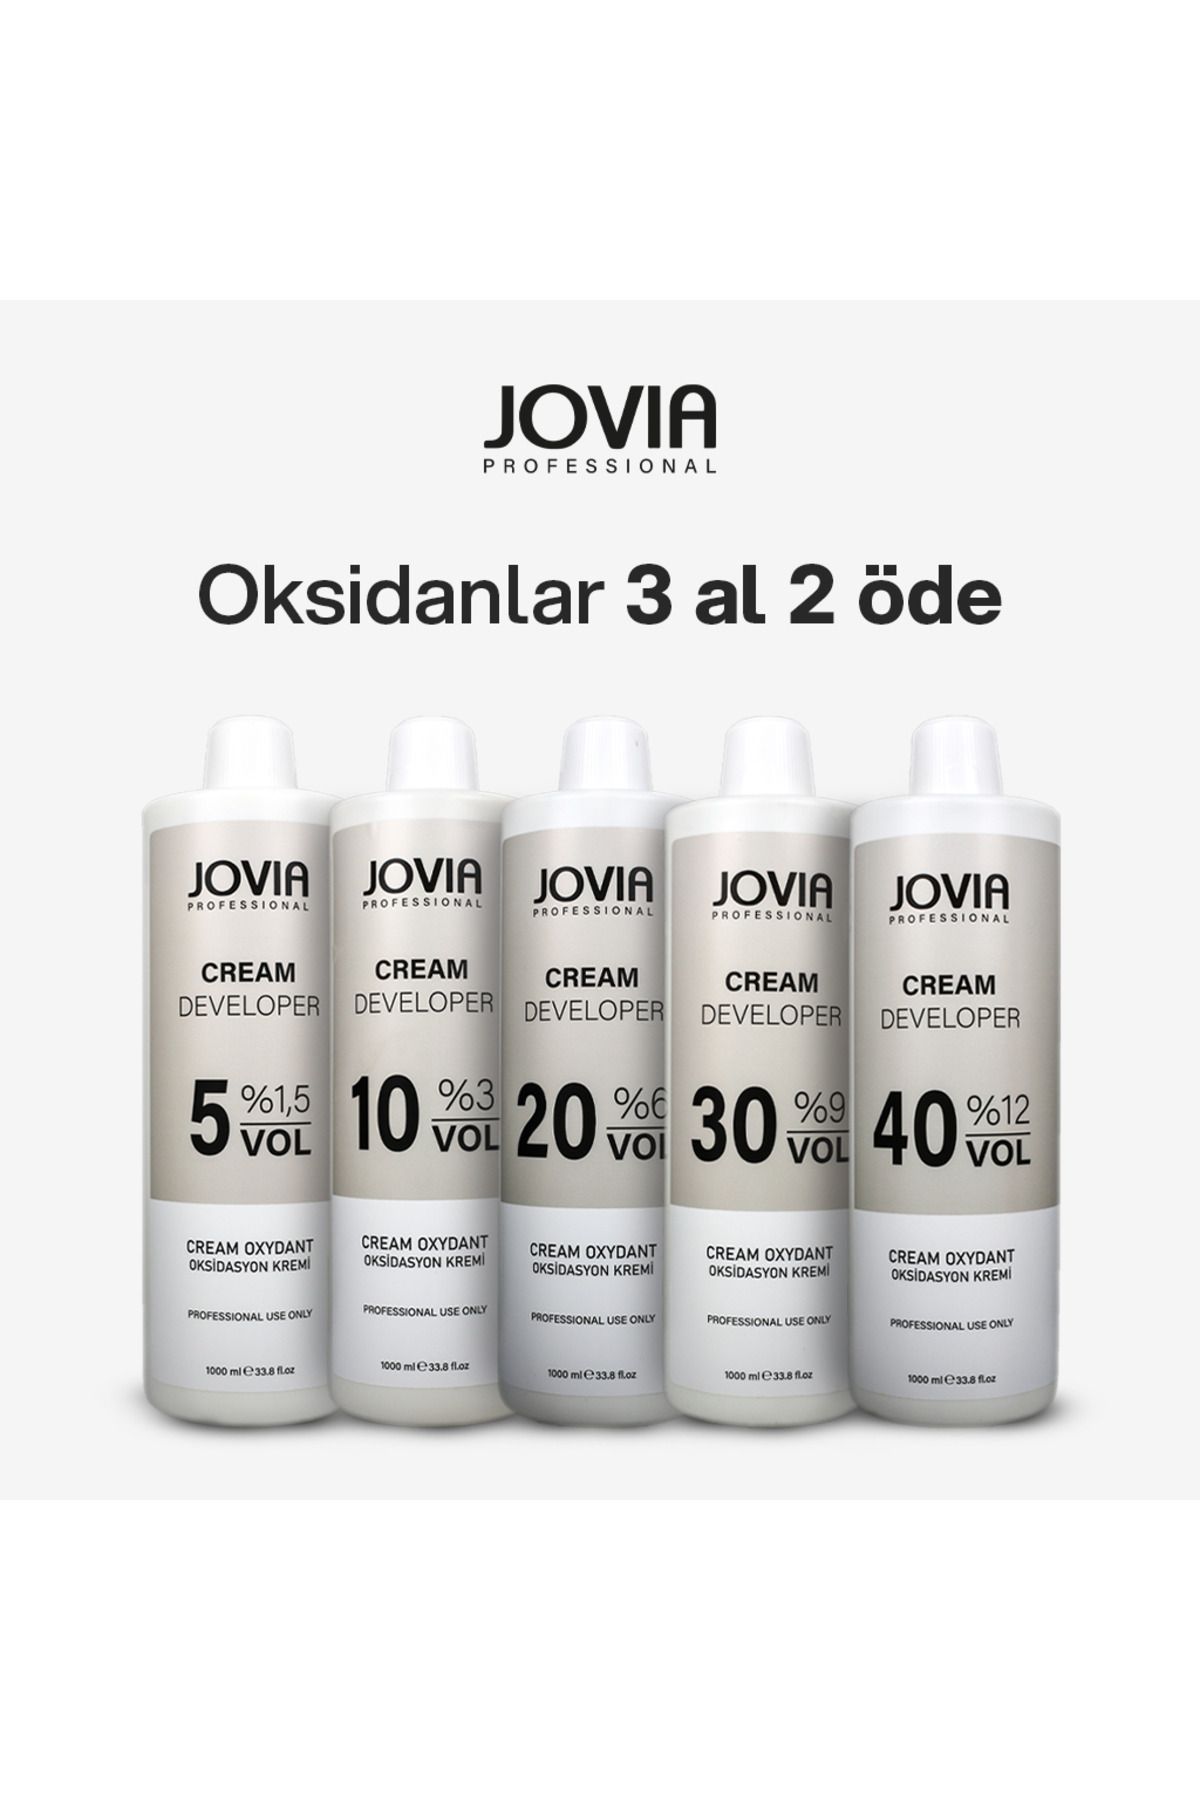 Jovia Cream Developer 20 Vol %6 Cream Oxydant Oksidasyon Kremi